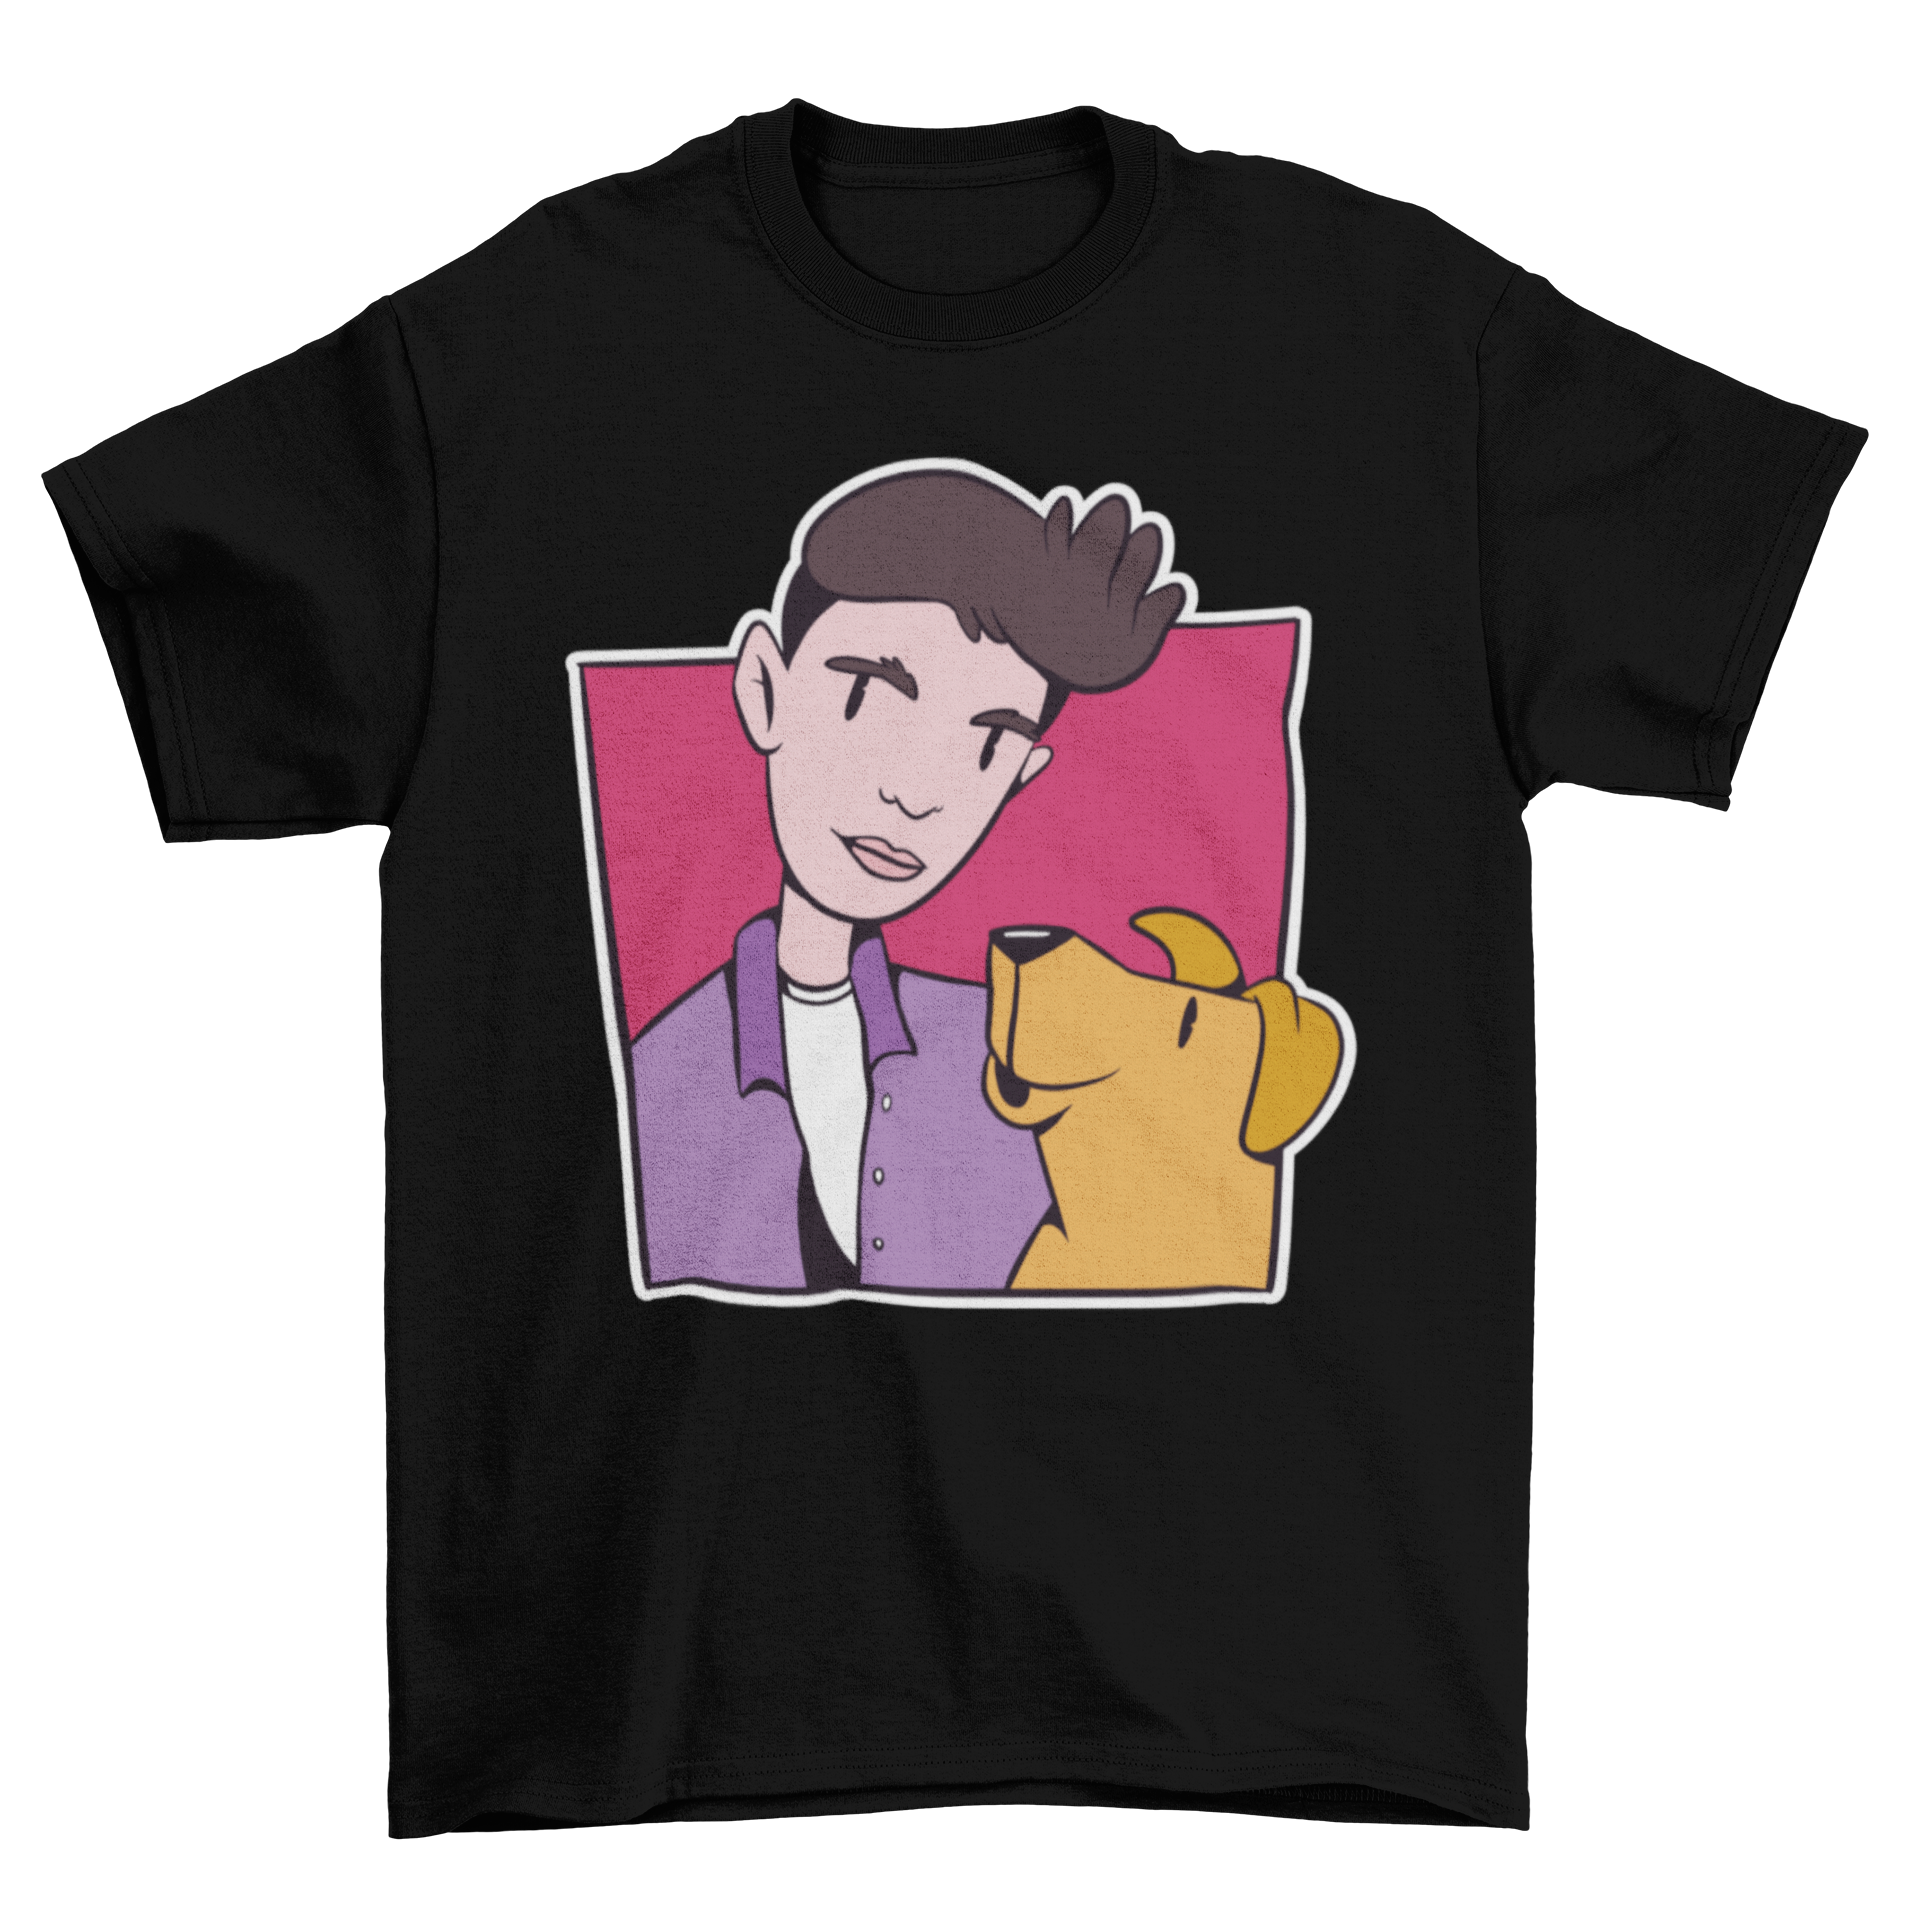 Dog and boy t-shirt